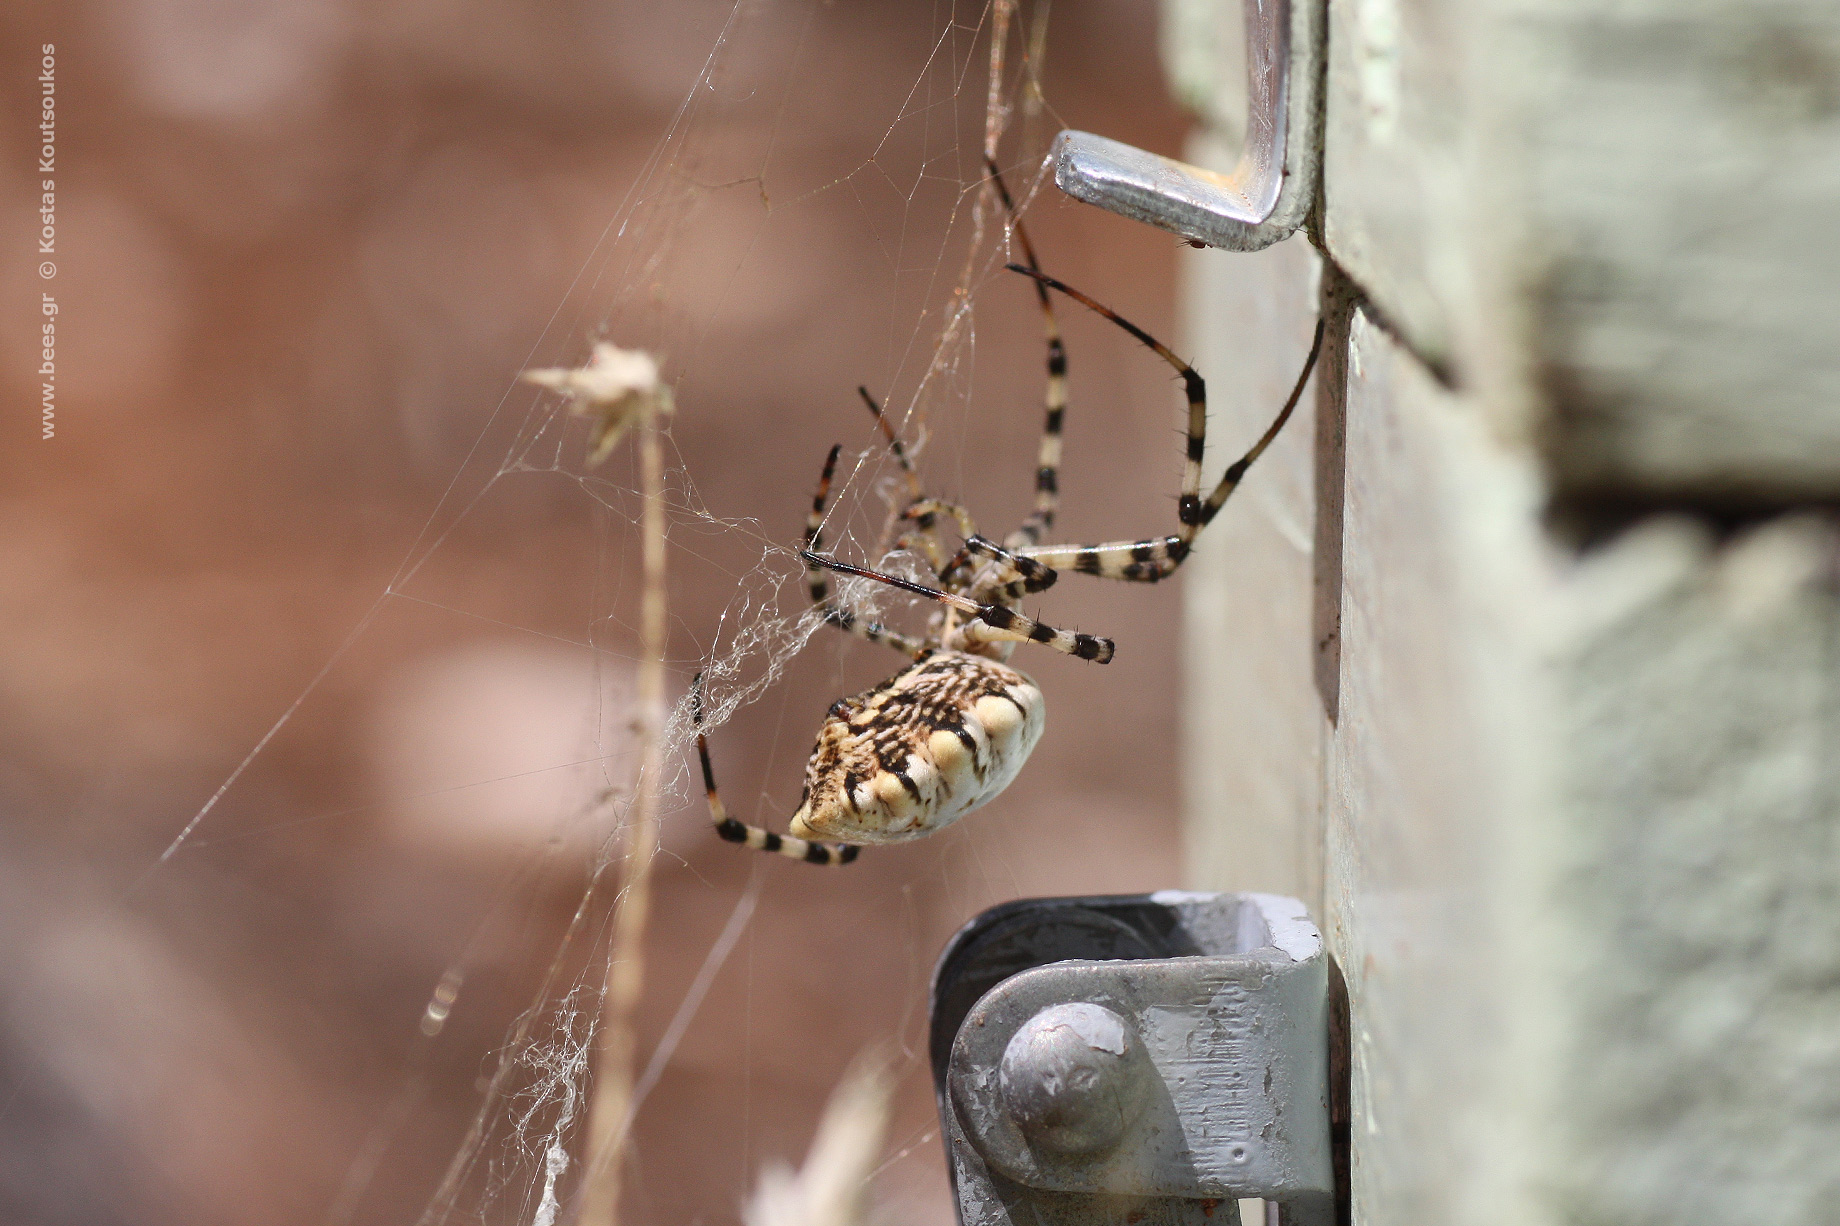 Argiope lobata, η αράχνη λοβωτή αργιόπη ανεβαίνει τον ιστό που έχει στήσει μπροστά ή καλύτερα πάνω σε μια κυψέλη